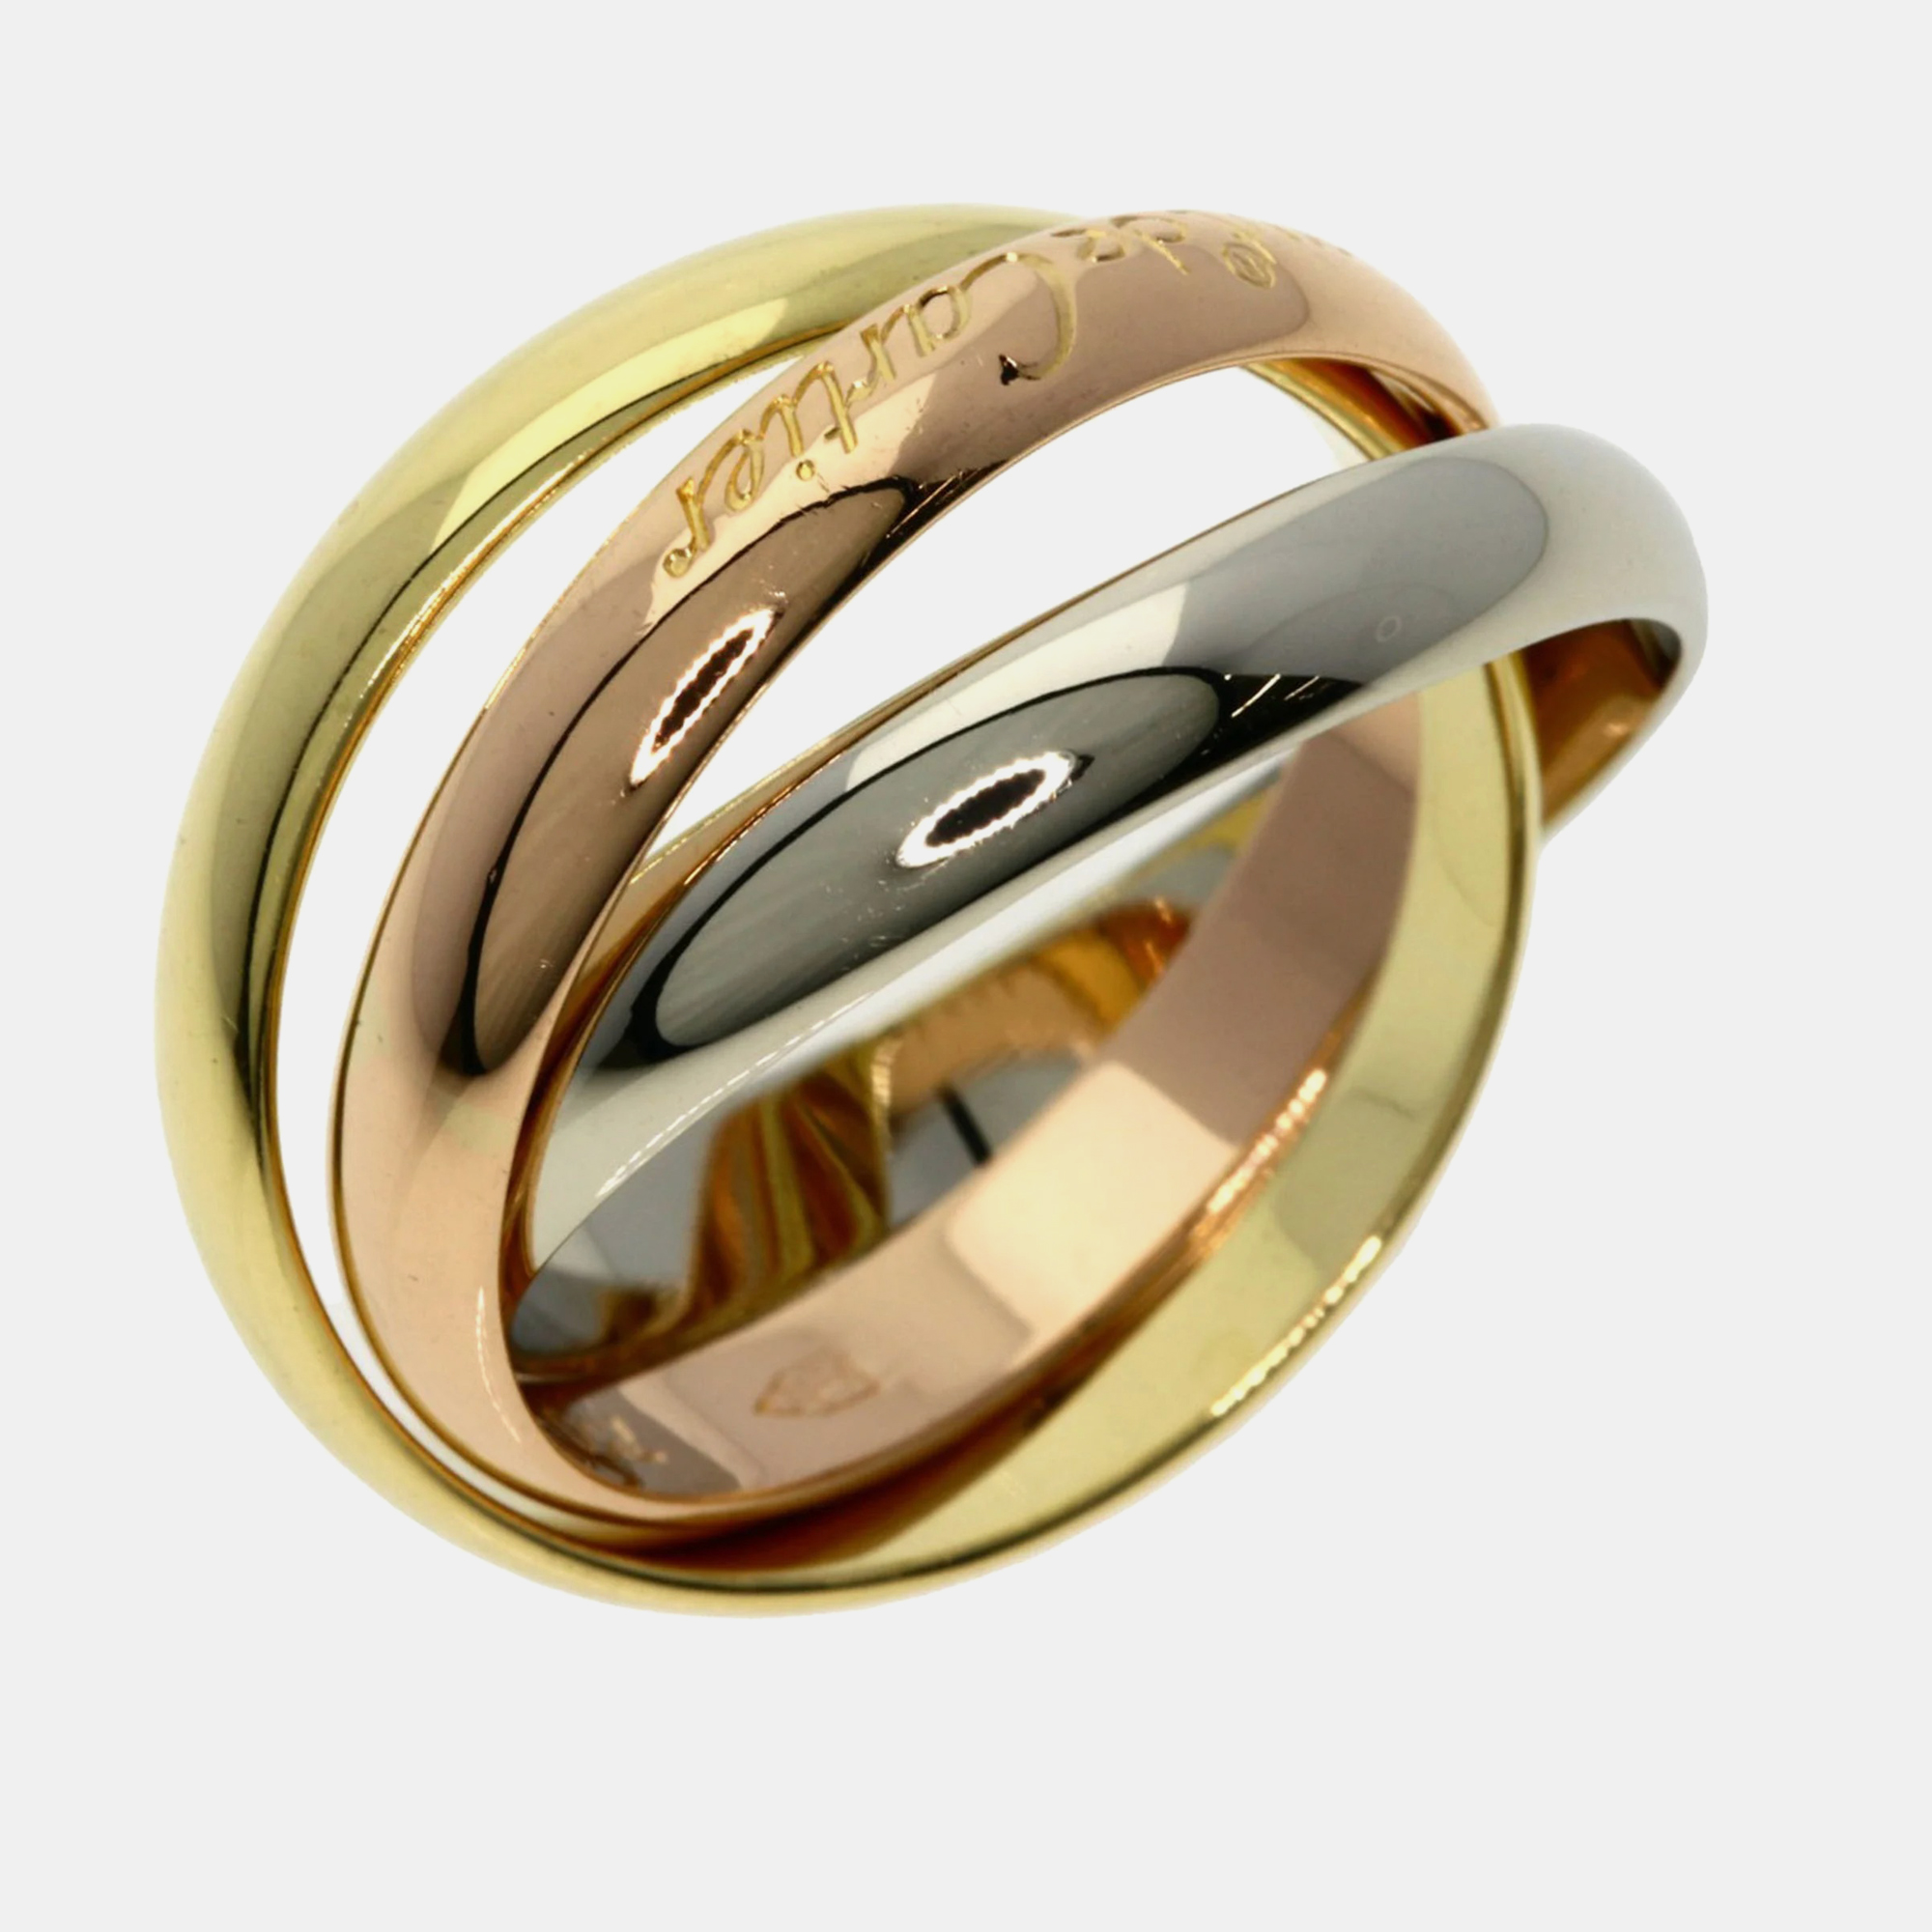 Cartier 18k yellow, rose, white gold trinity band ring eu 54